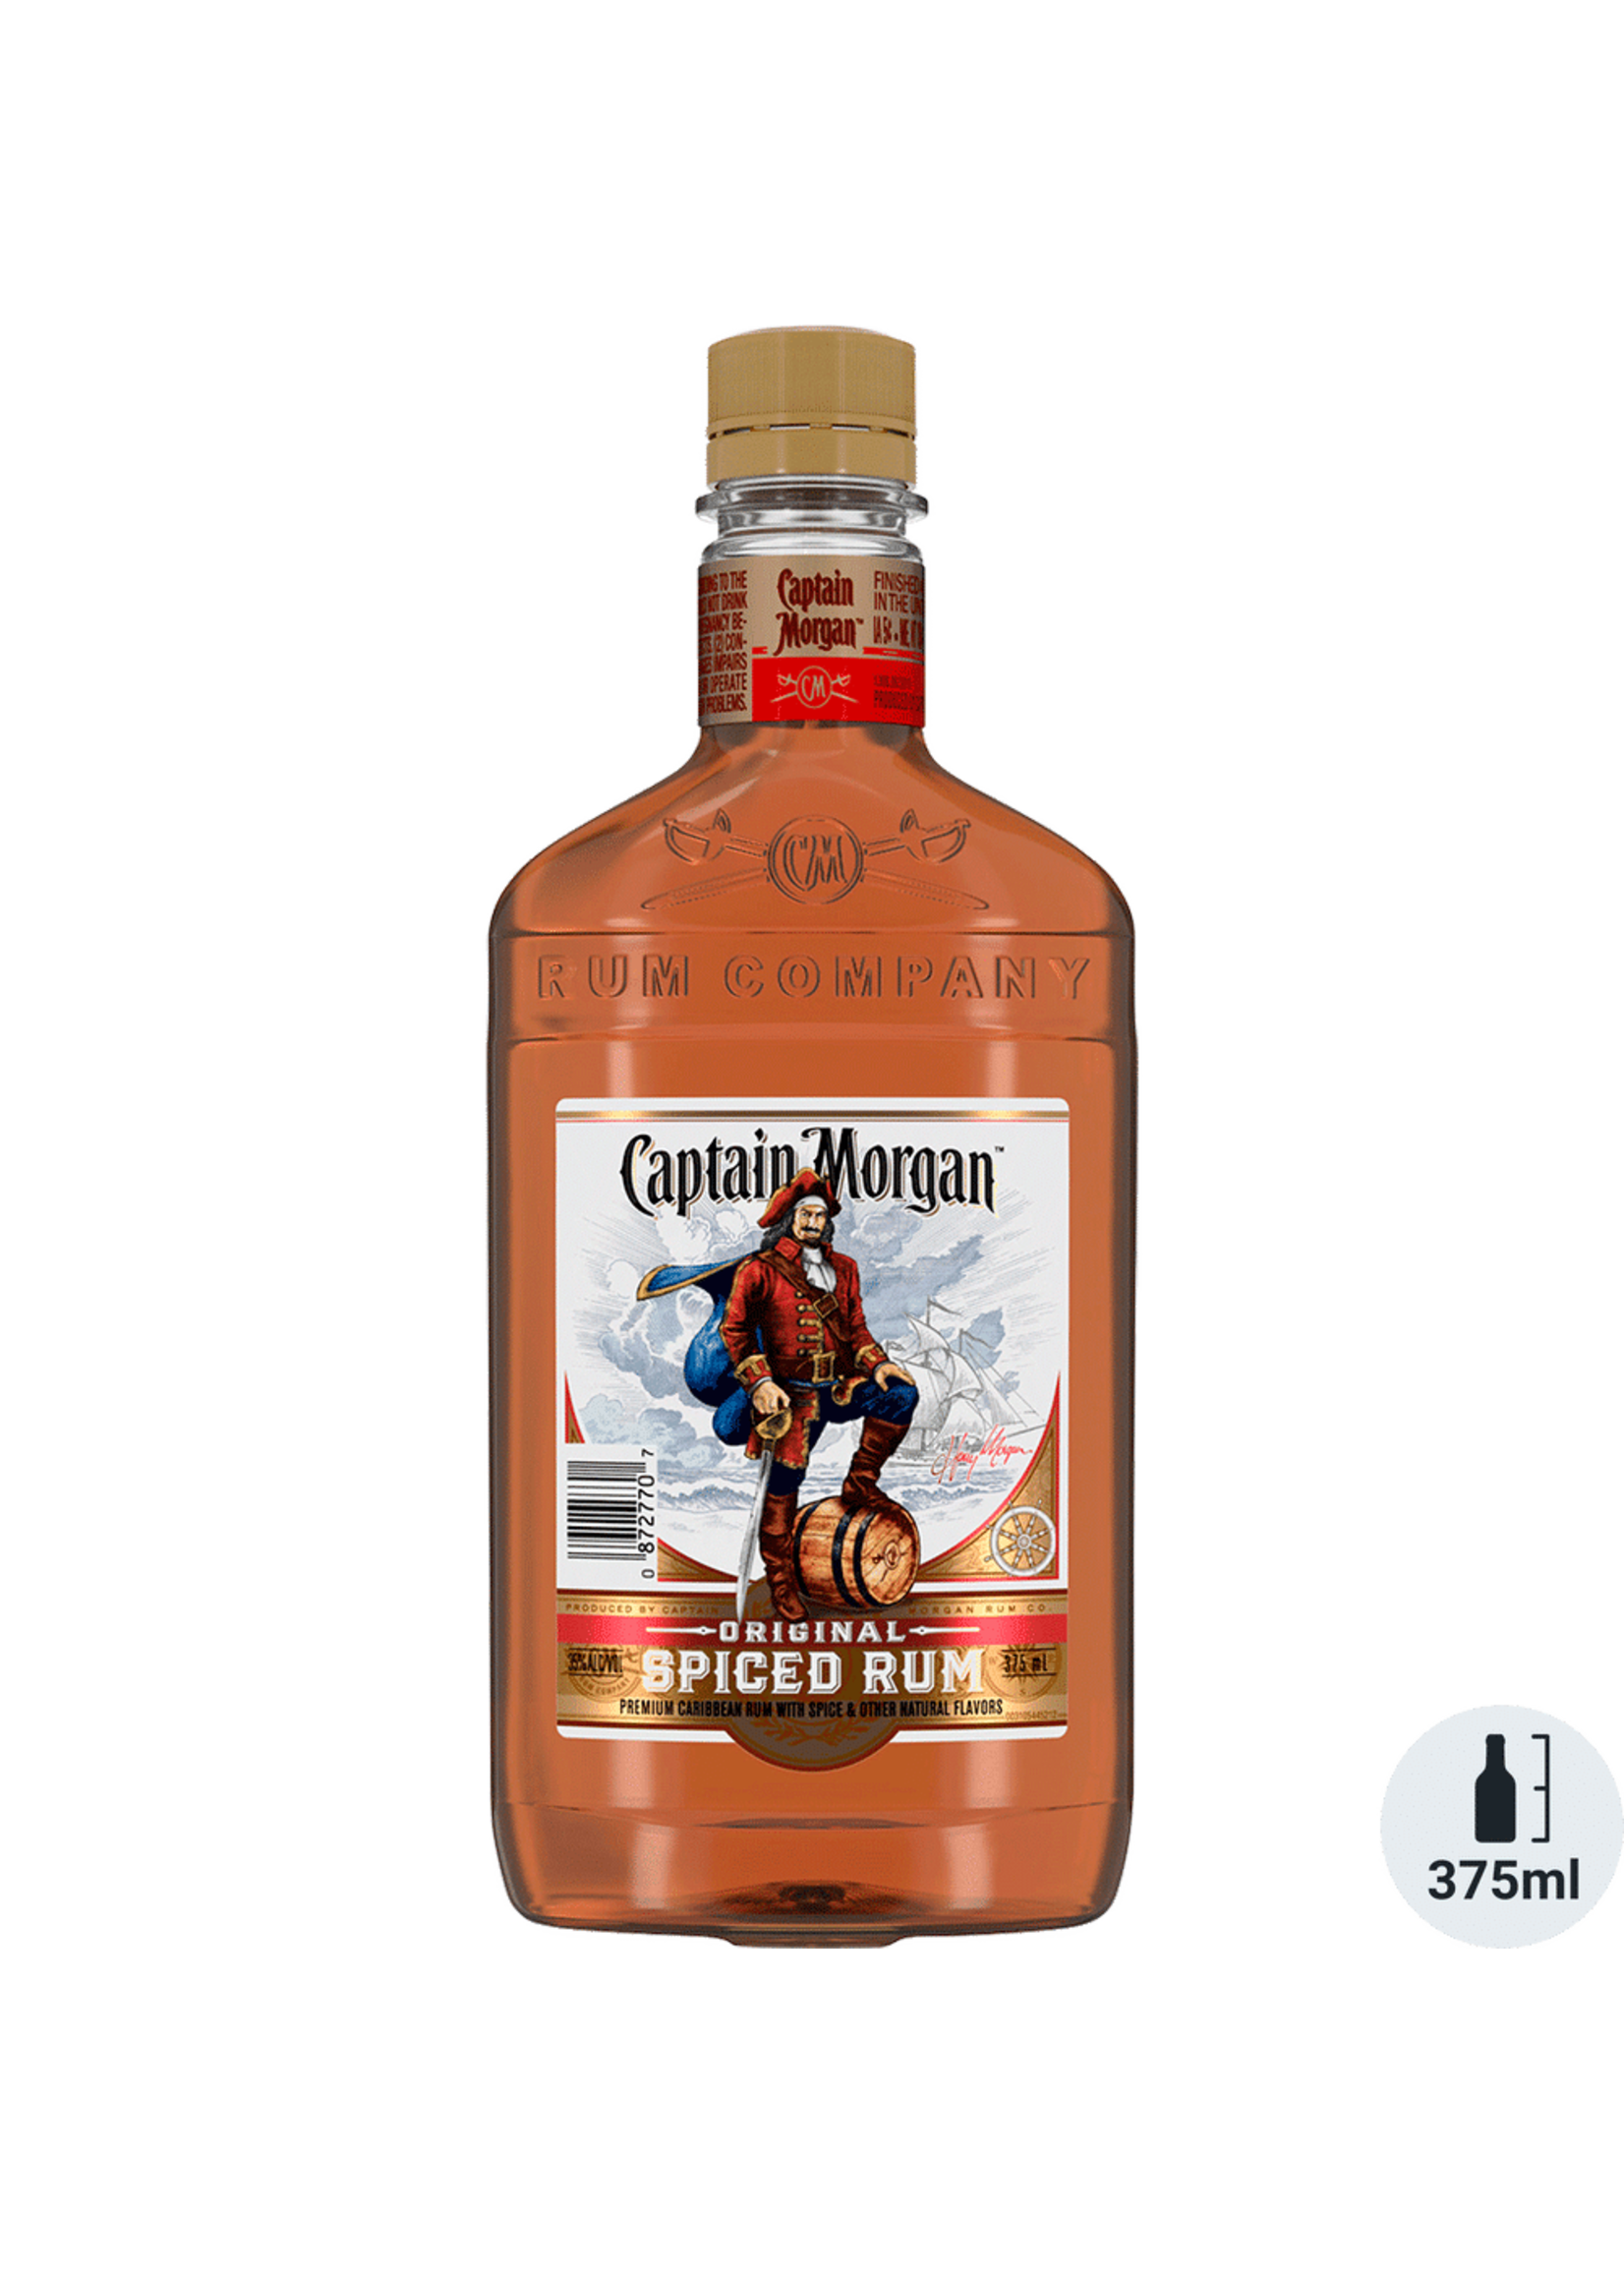 Captain Morgan Original Spiced Rum 70Proof Pet 375ml